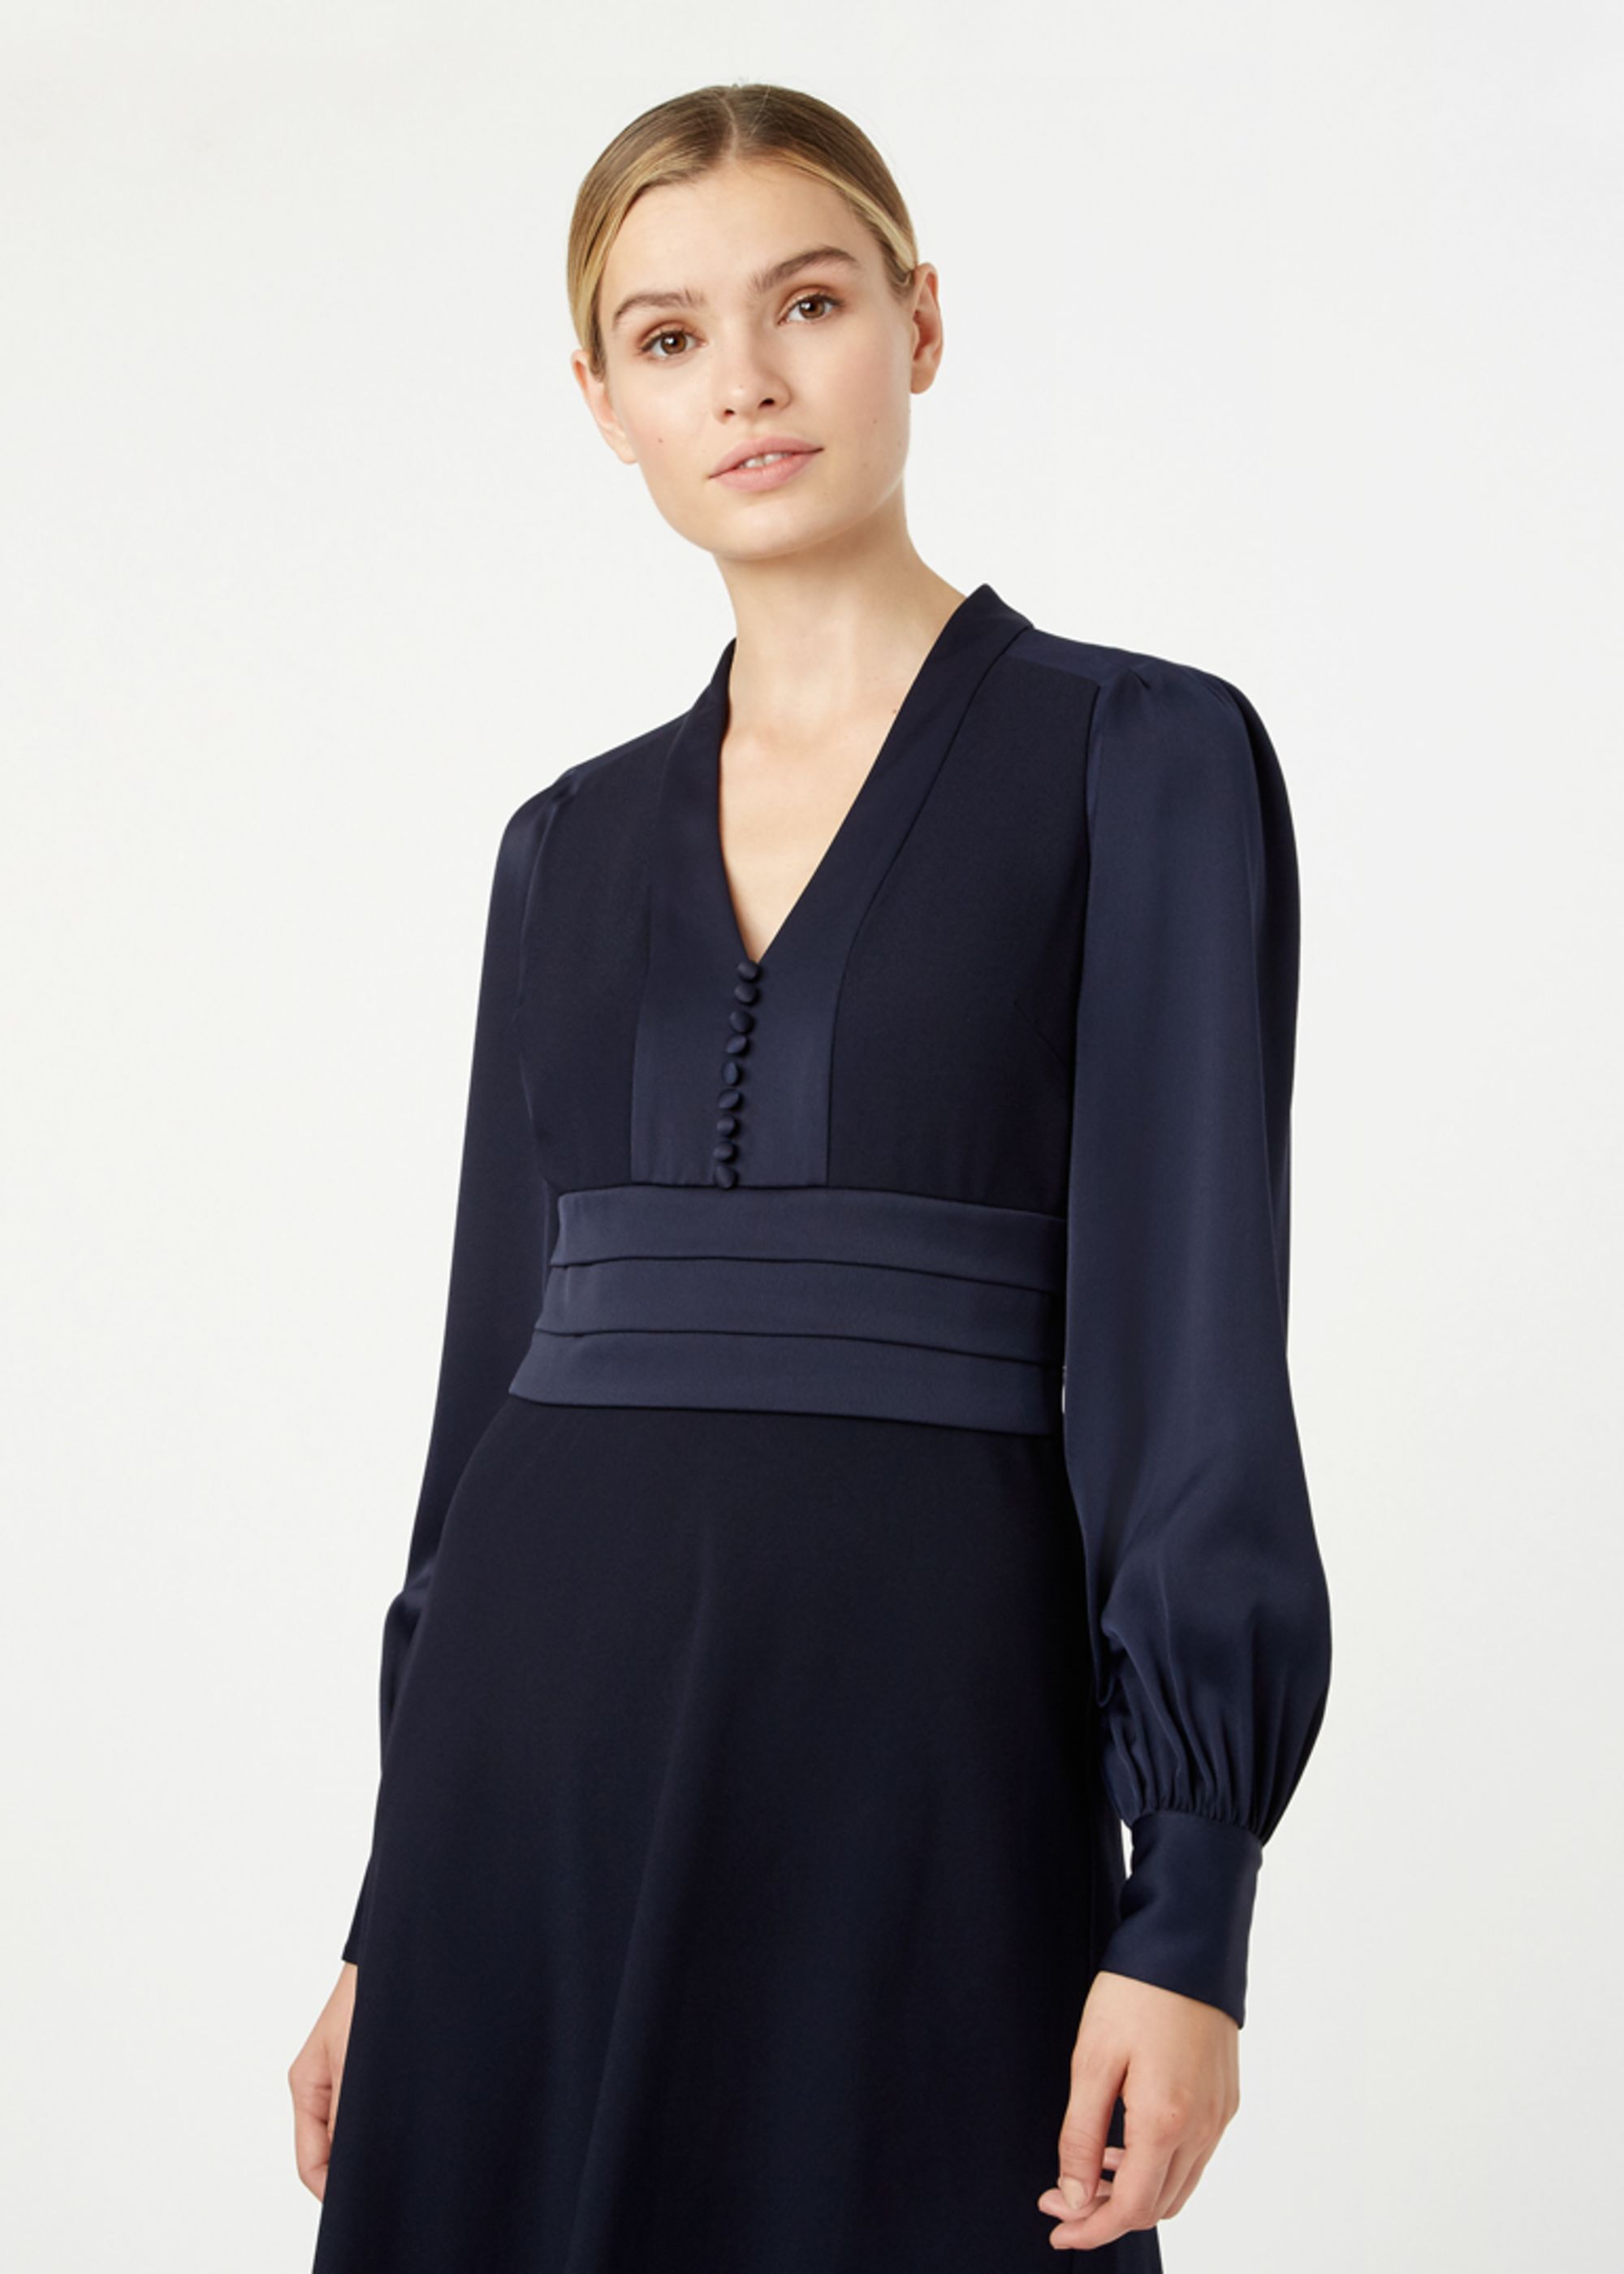 Hobbs Josephine Dress Midi Fit & Flare Long Sleeve | eBay